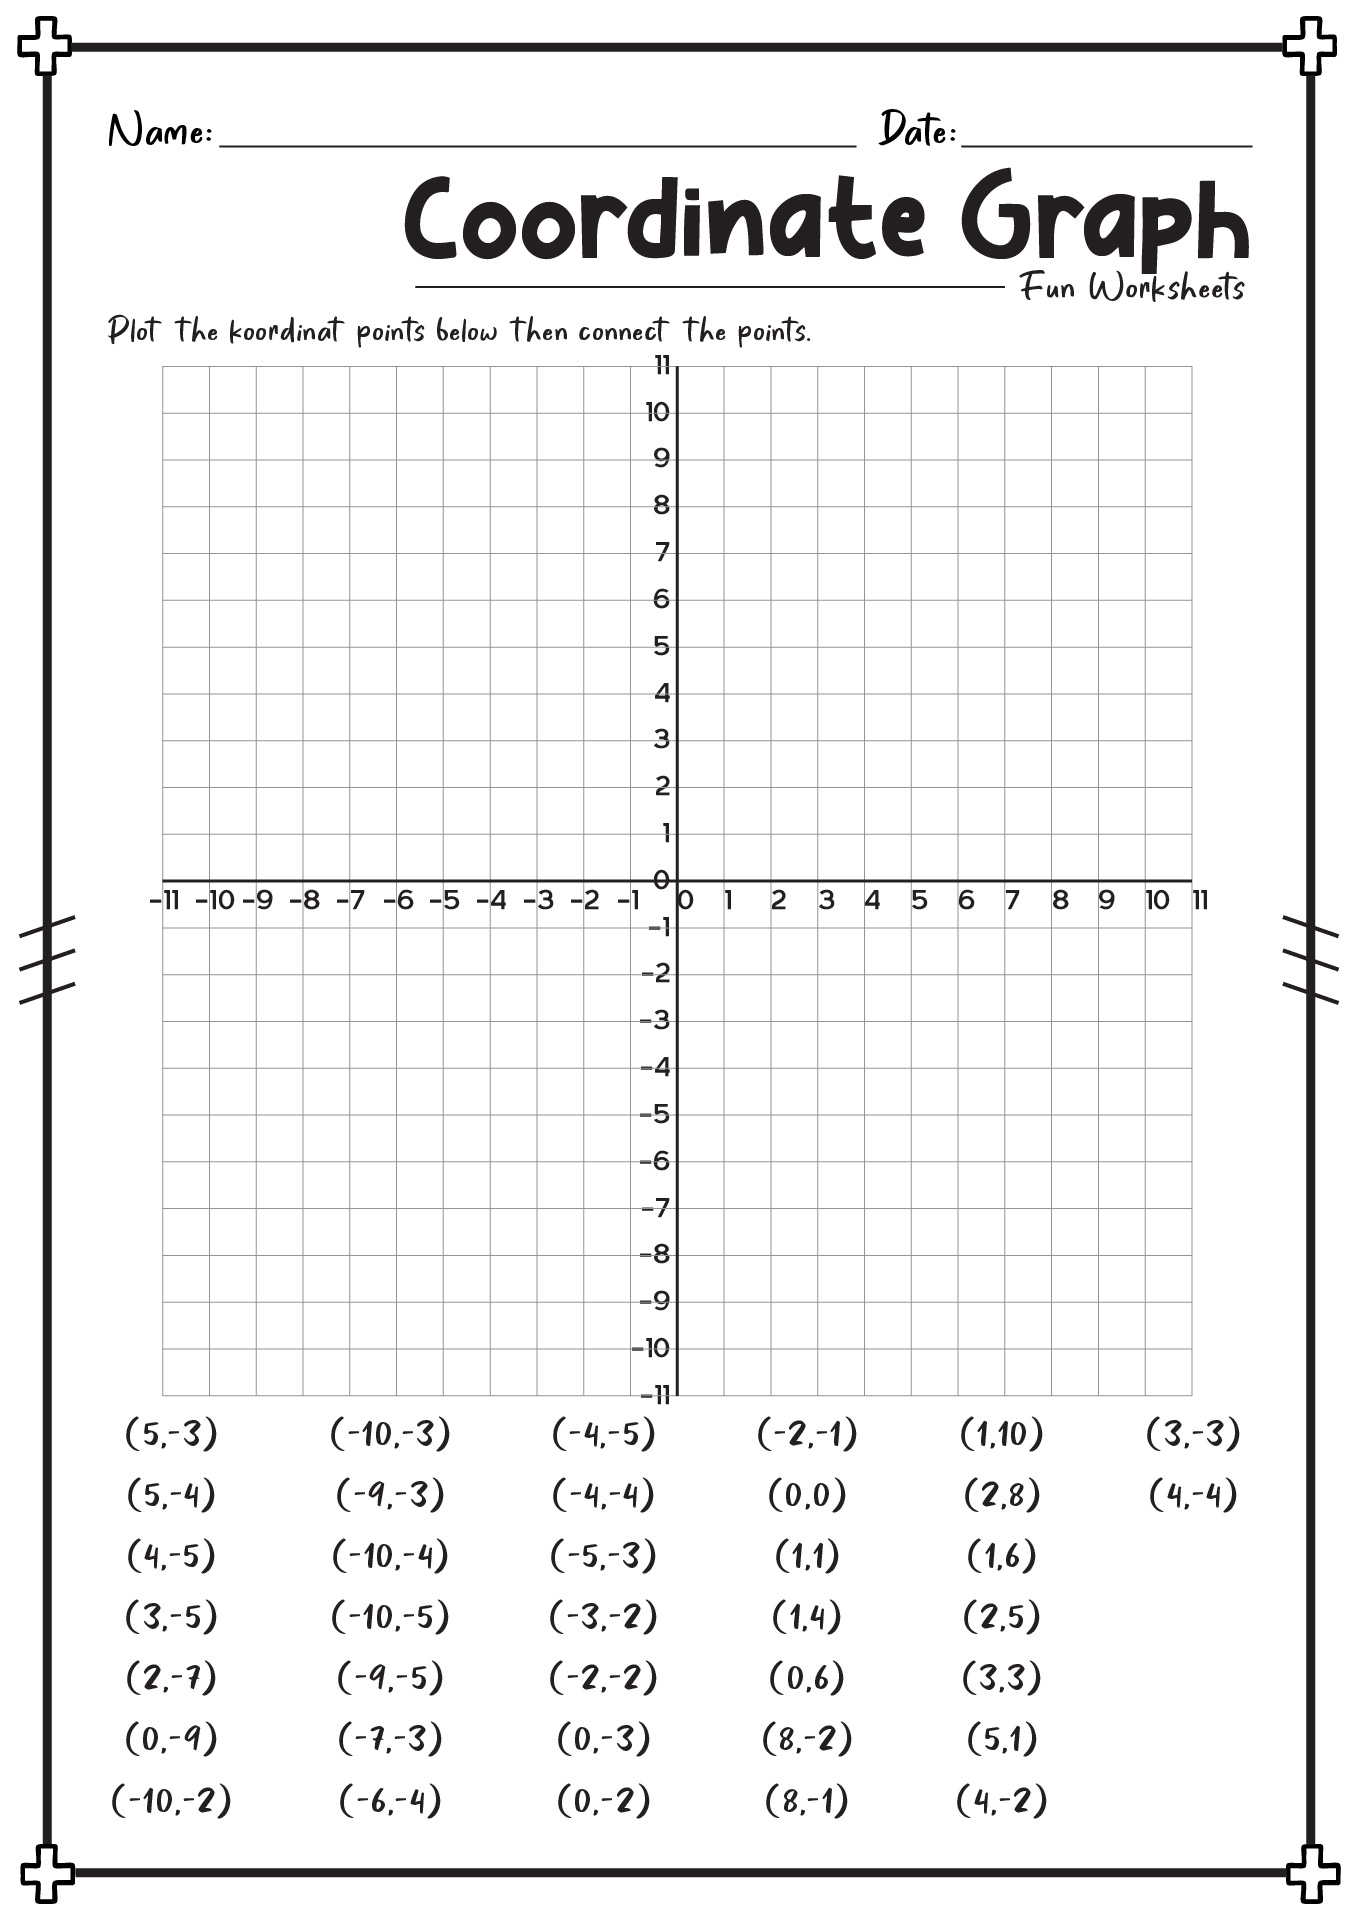 Fun Coordinate Graph Worksheets Image